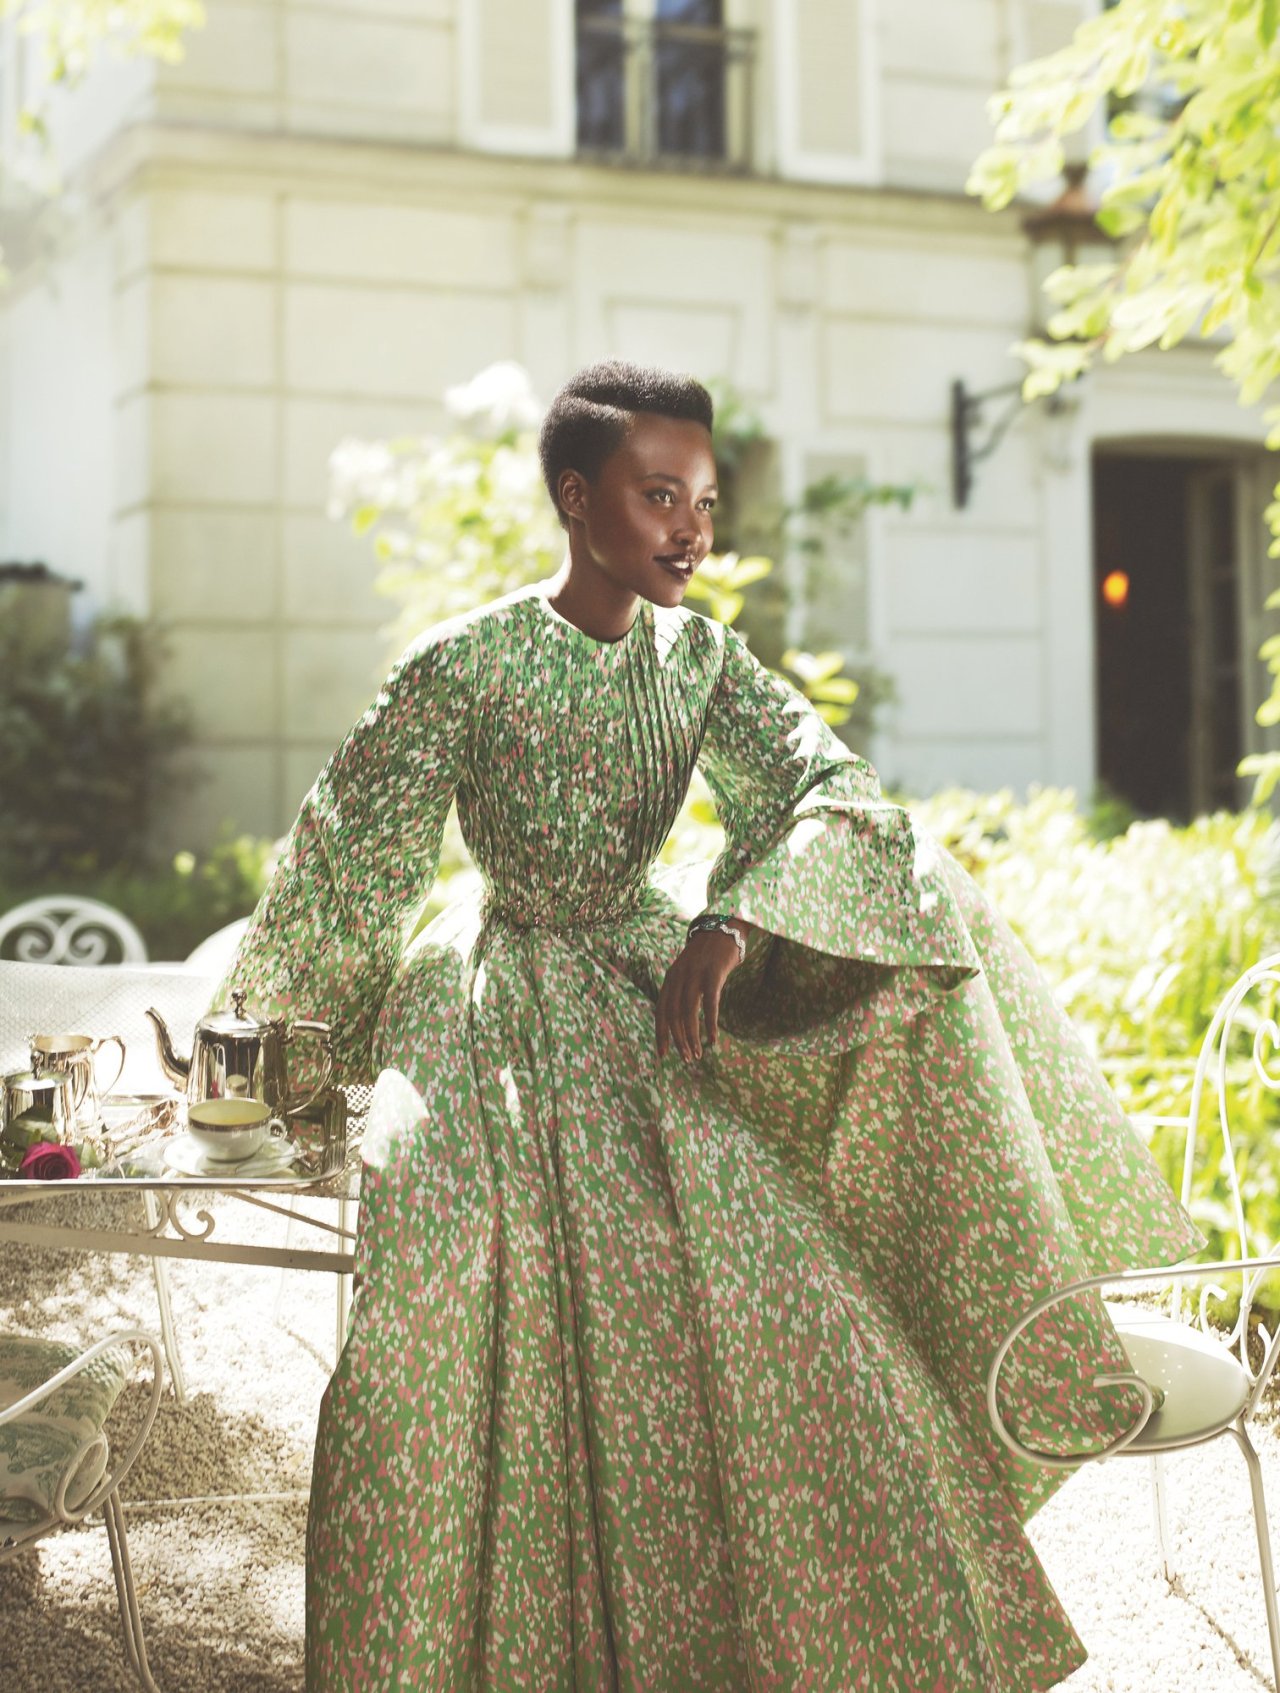 visualjunkee: model: Lupita Nyong’o - photographer: Mert Alas &amp; Marcus